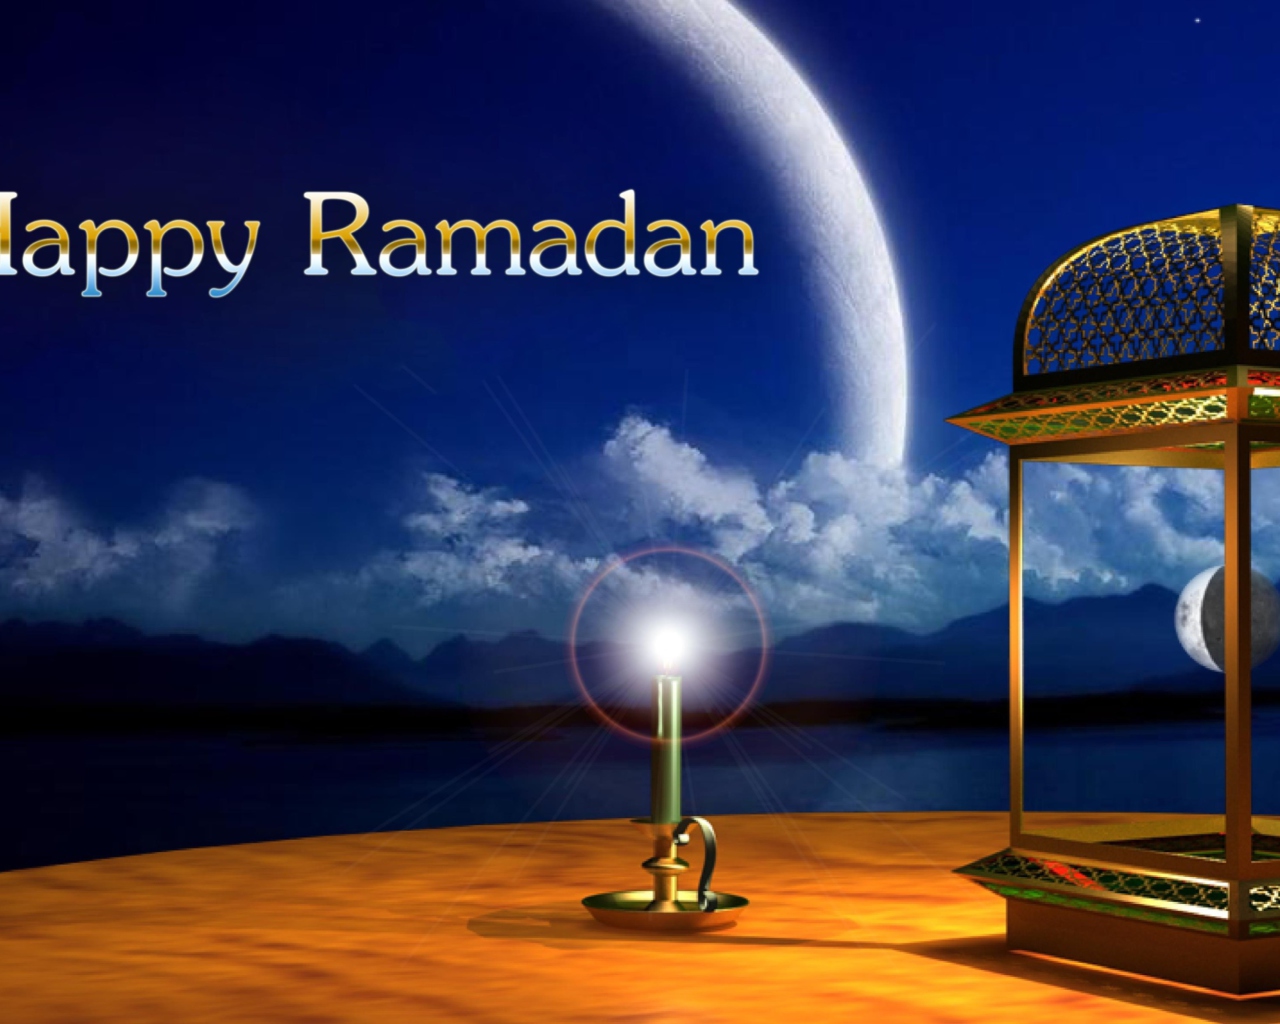 Happy Ramadan wallpaper 1280x1024